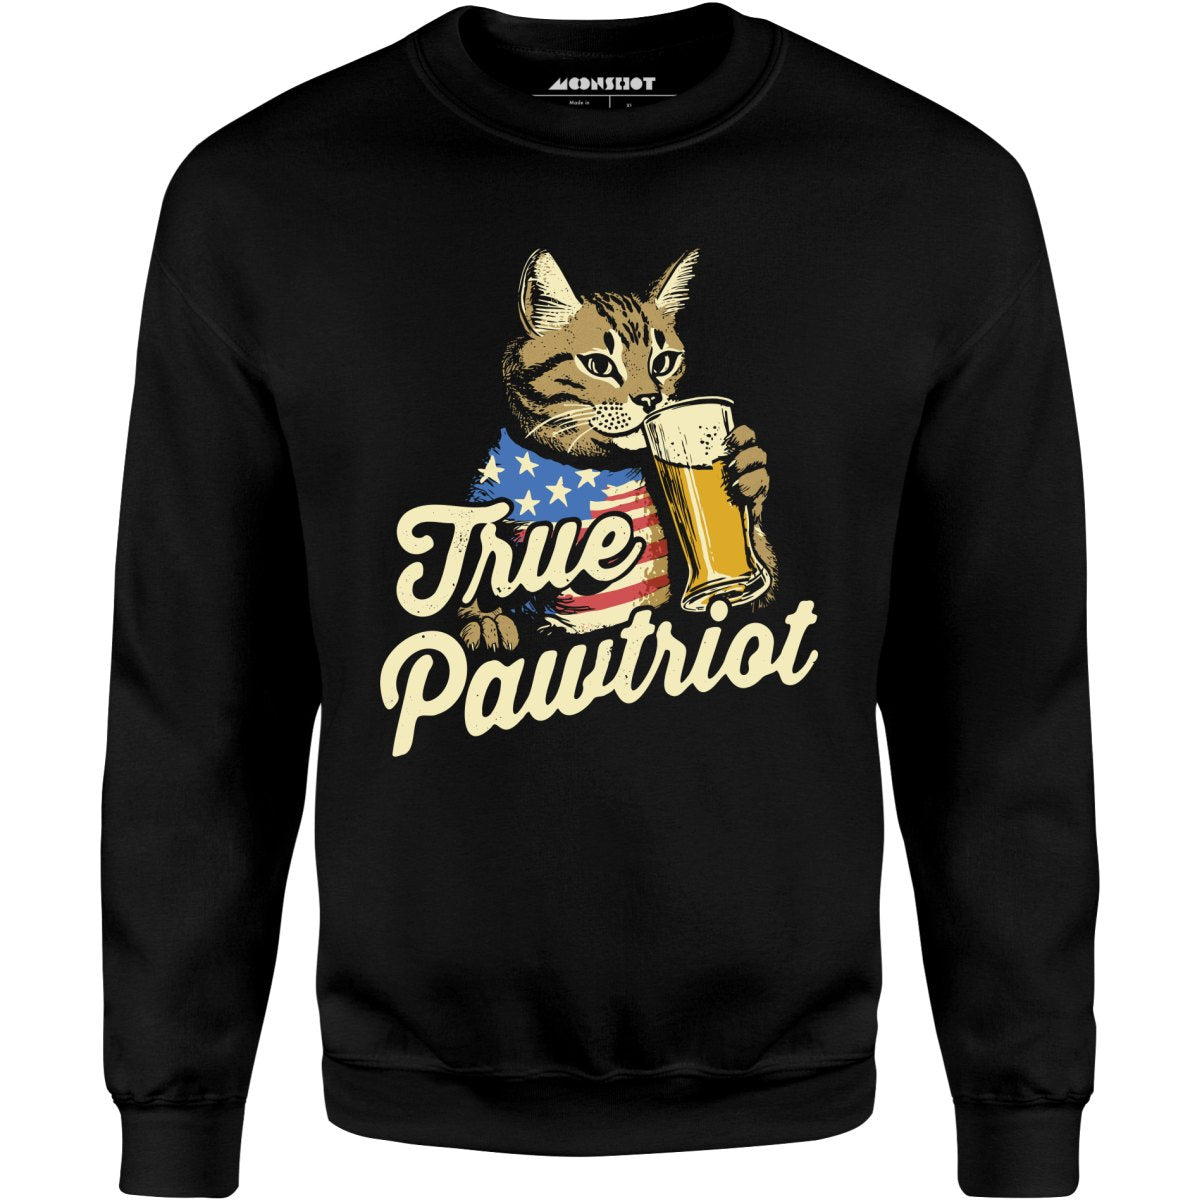 True Pawtriot - Unisex Sweatshirt